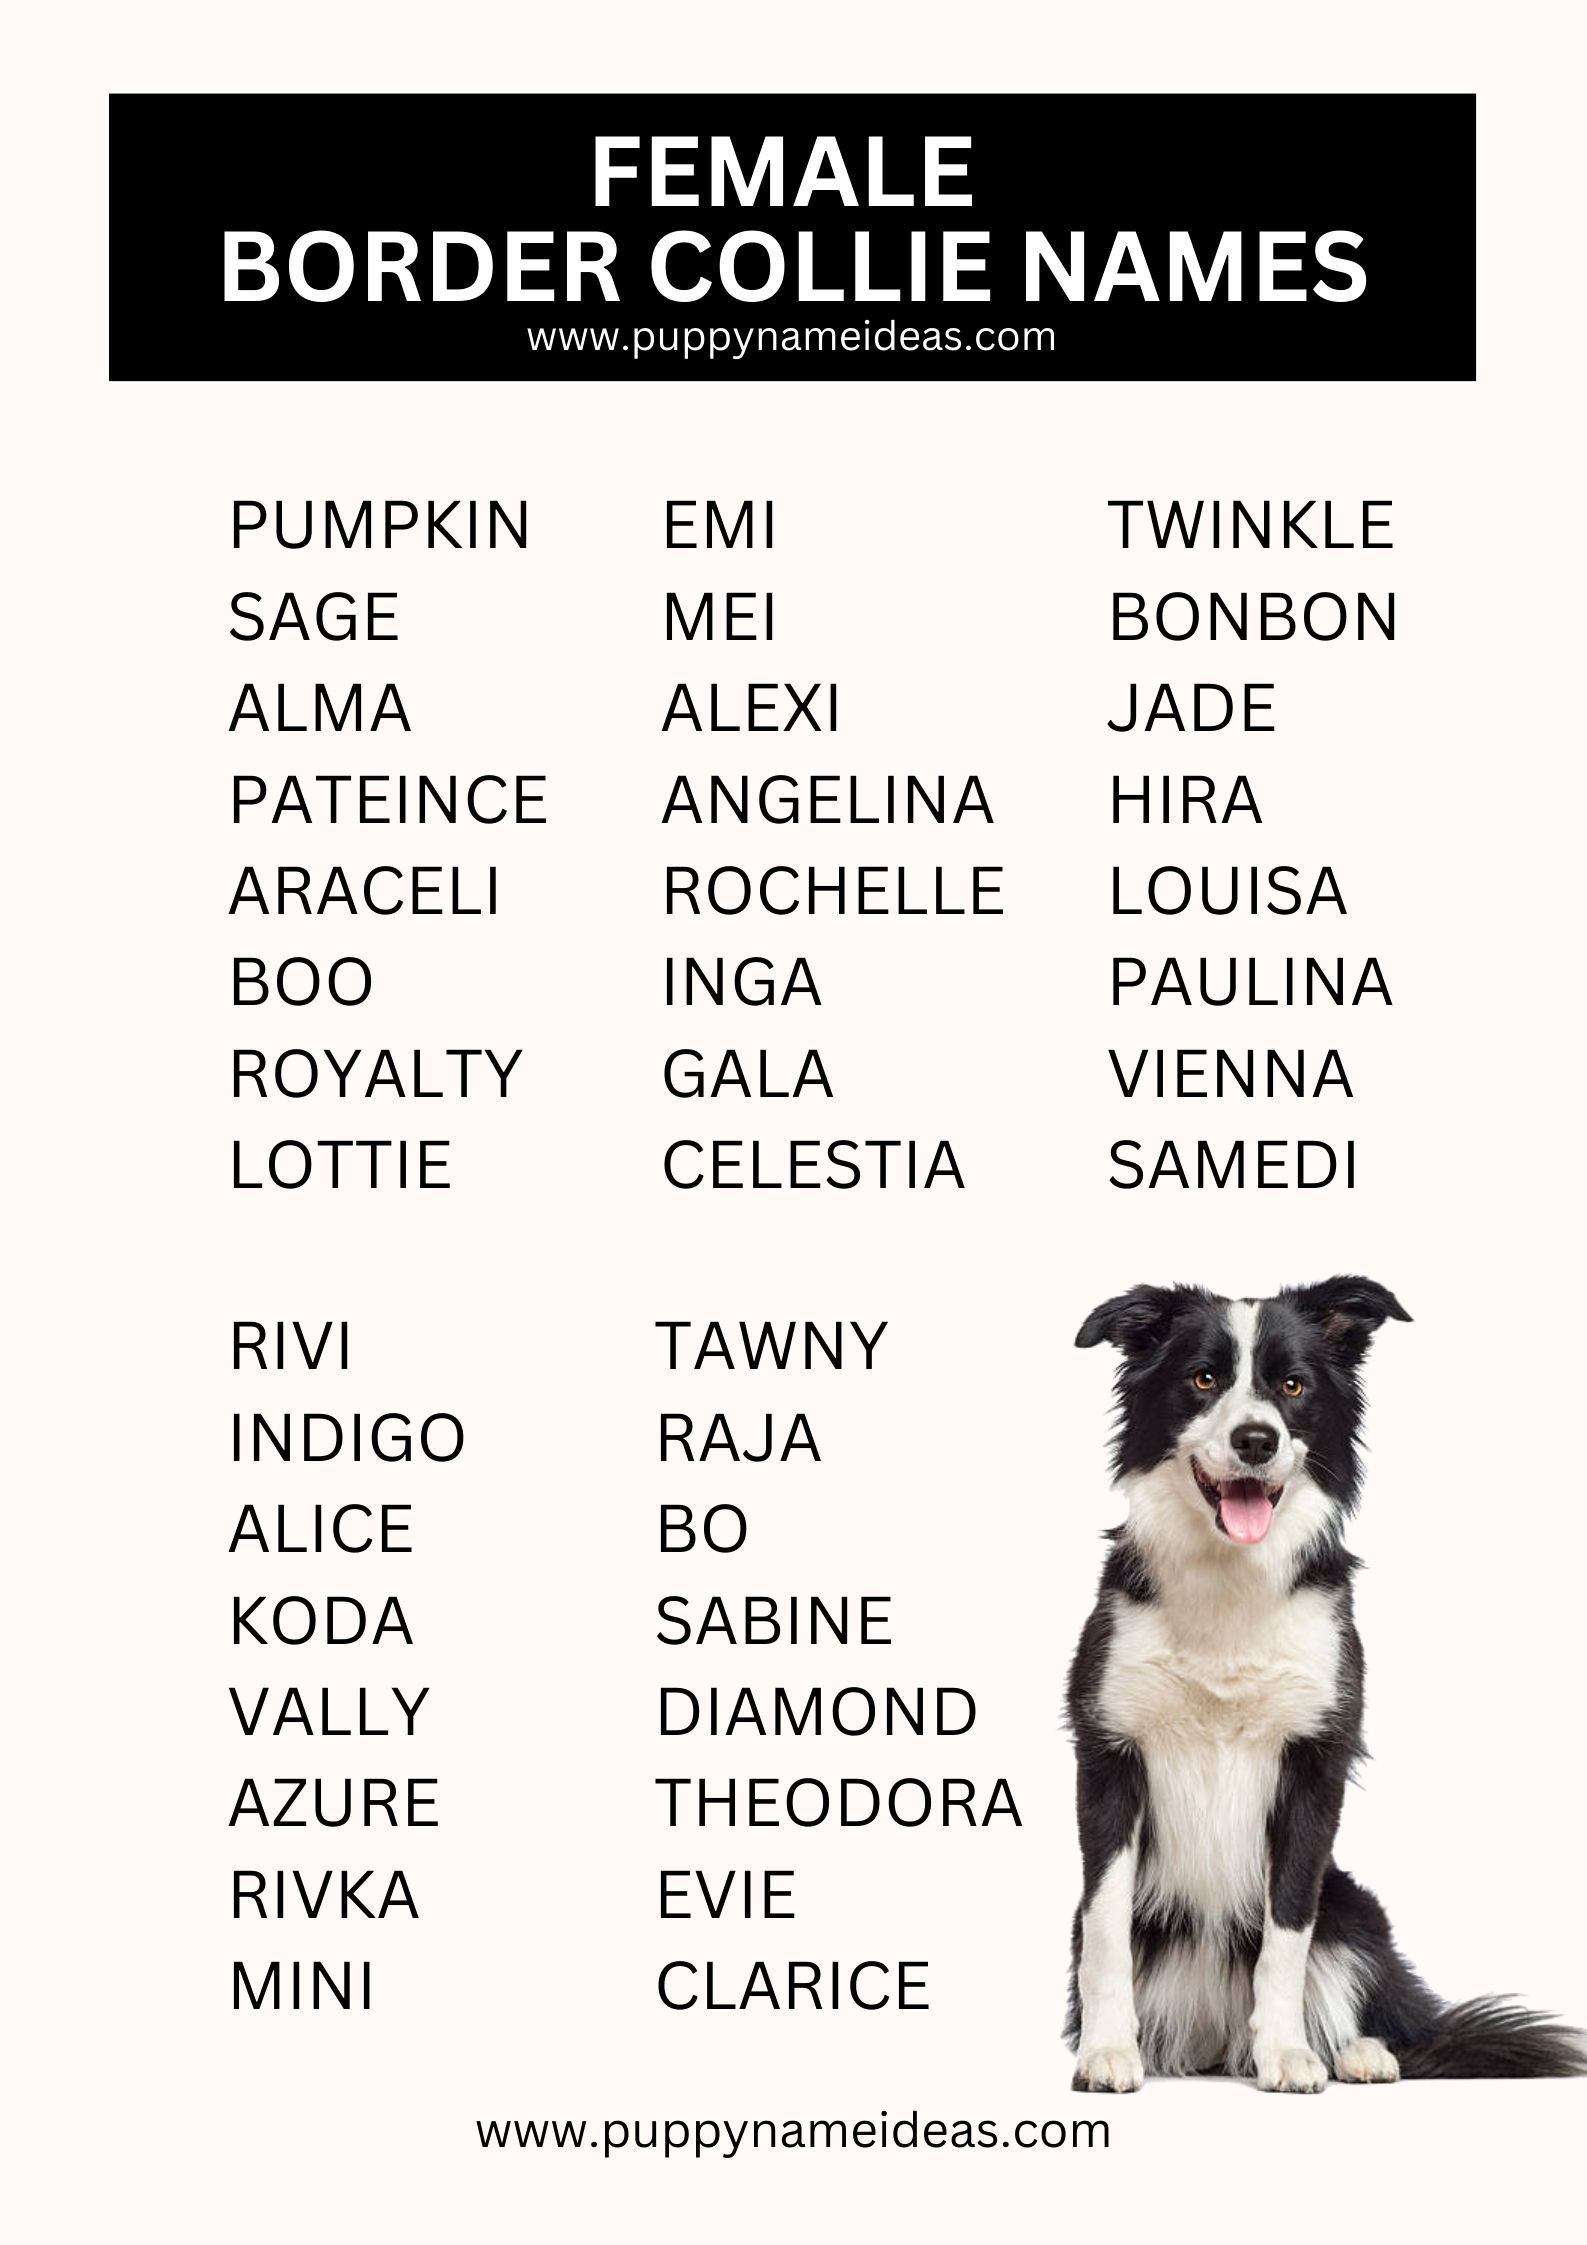 List Of Female Border Collie Names